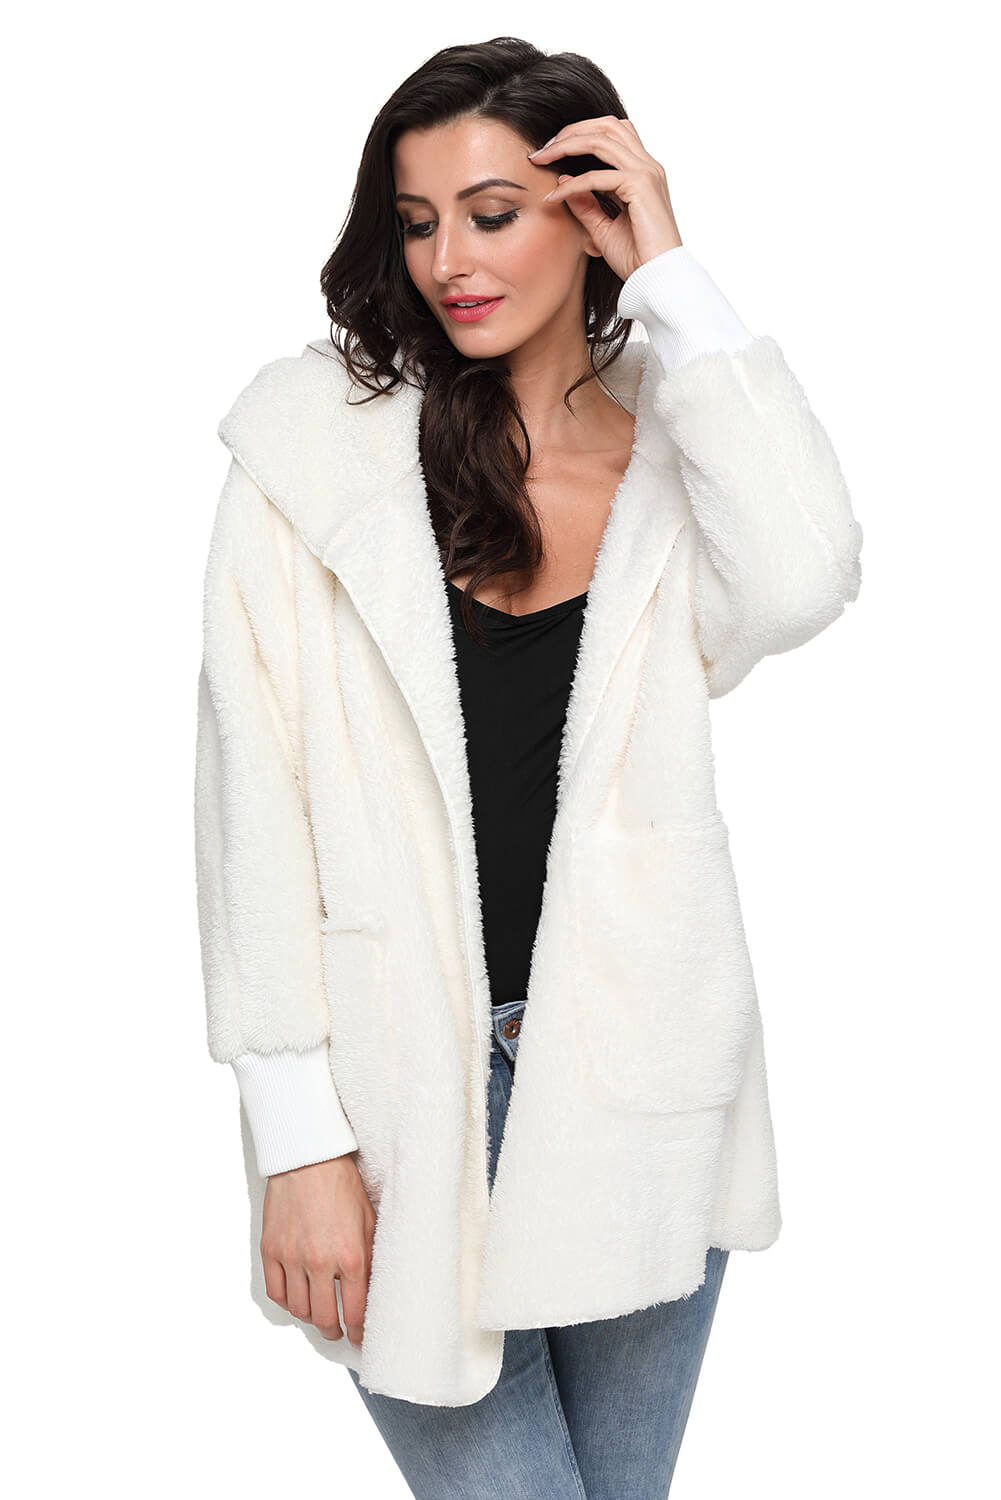 Off White Hooded Open Front Soft Fleece Coat